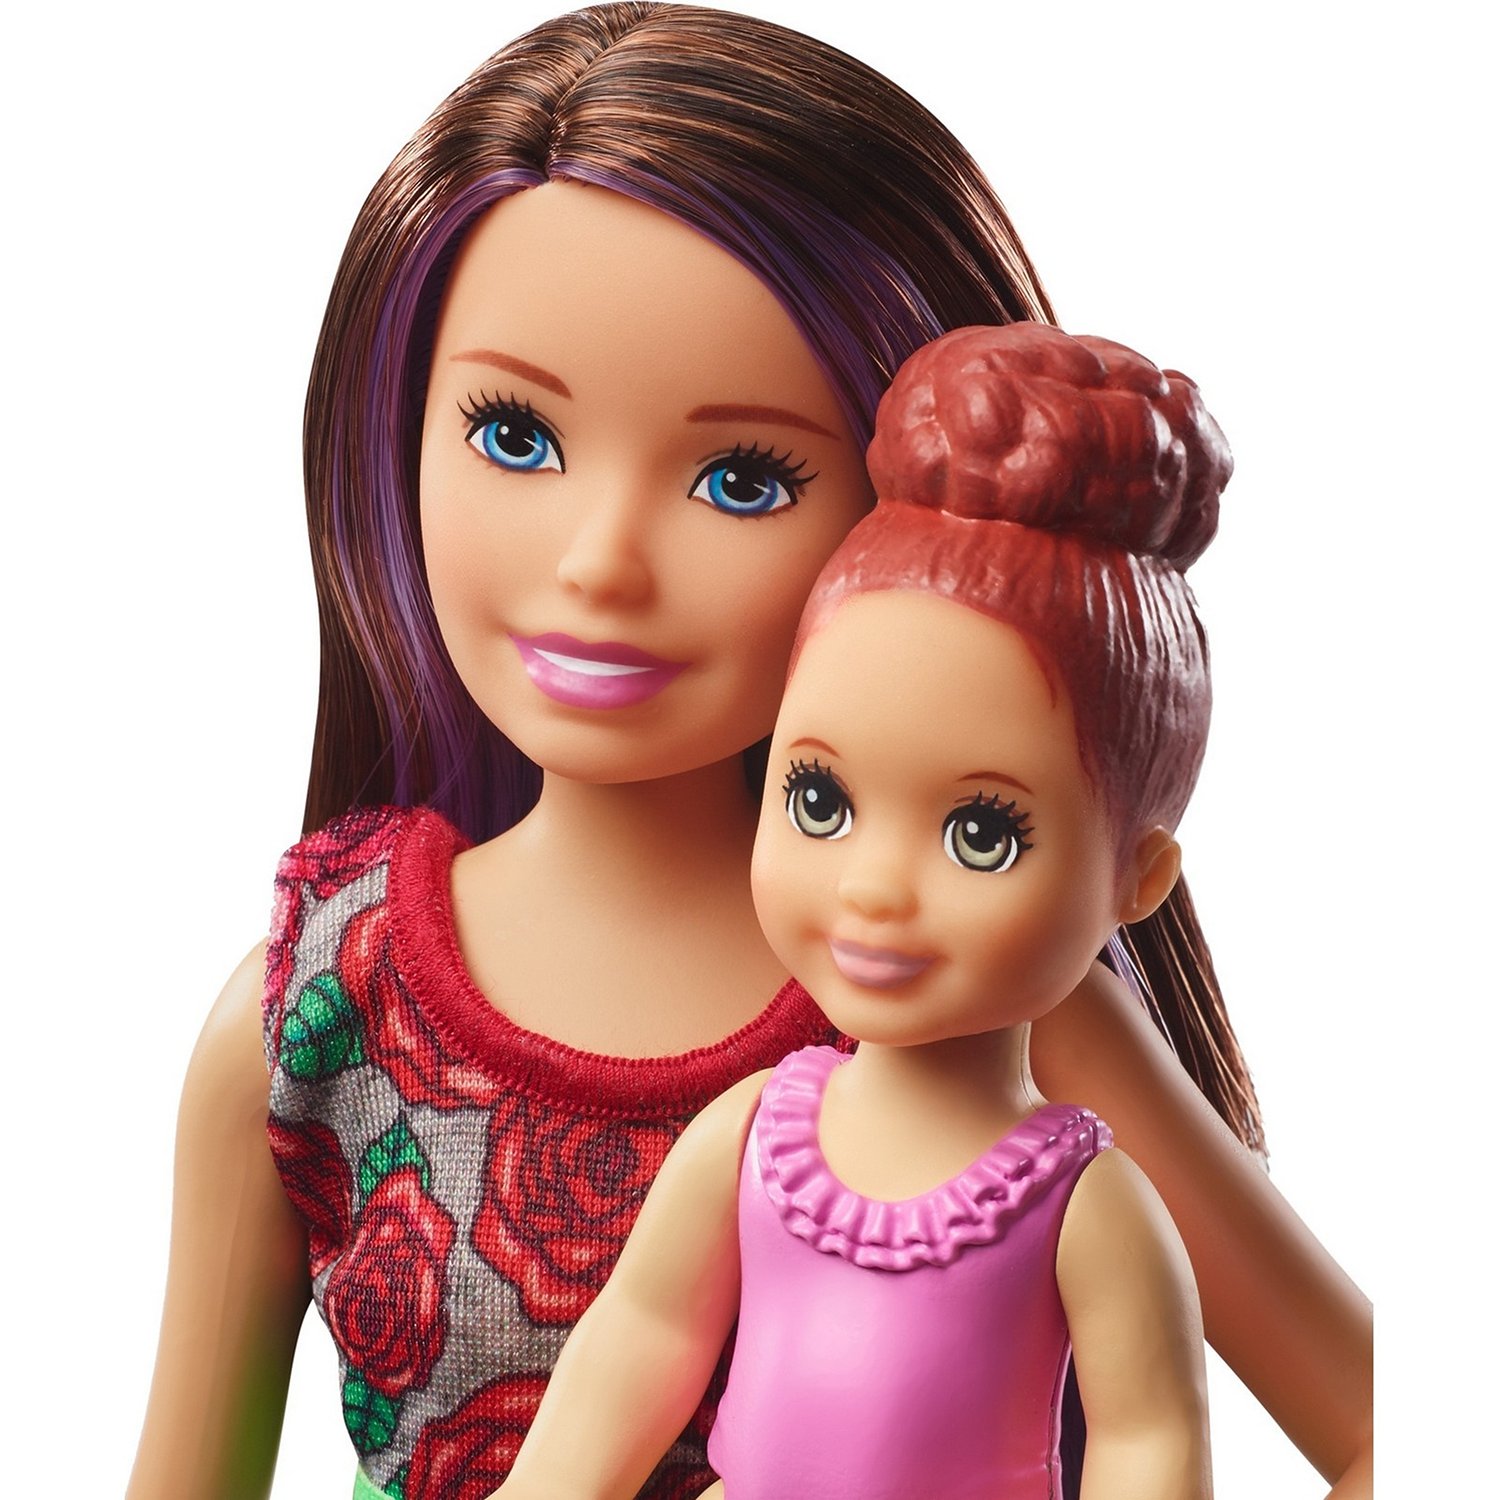 Набор кукол Barbie Няня Скиппер, FXH05